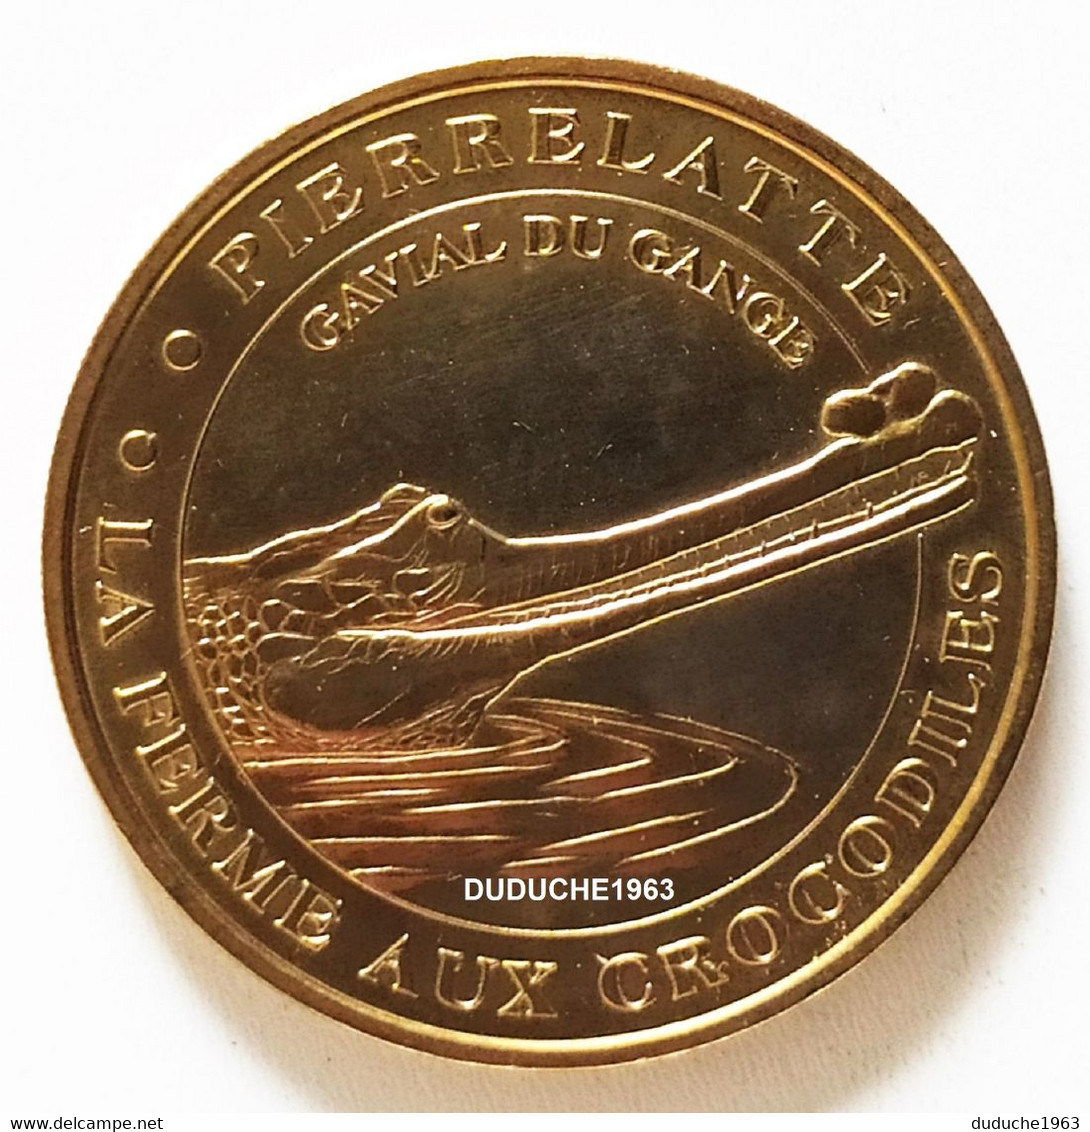 Monnaie De Paris 26.Pierrelatte - Gavial Du Gange 2001 - 2001